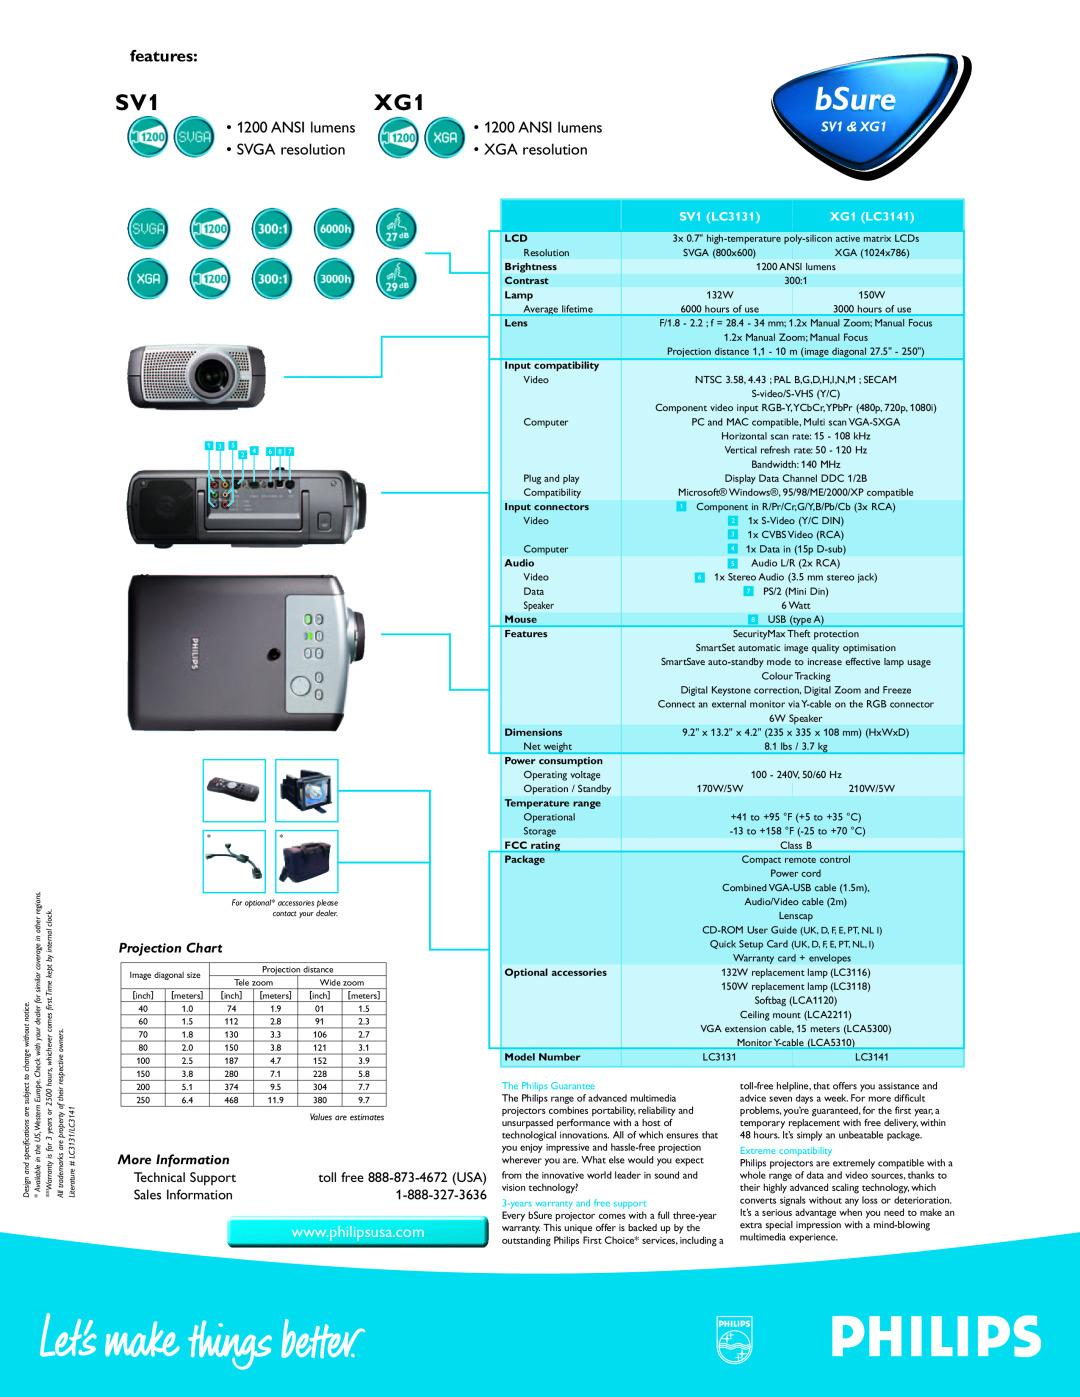 Philips XG1SV1 bSure, features, ANSI lumens, SVGA resolution, XGA resolution, Projection Chart, More Information, SV1 &XG1 